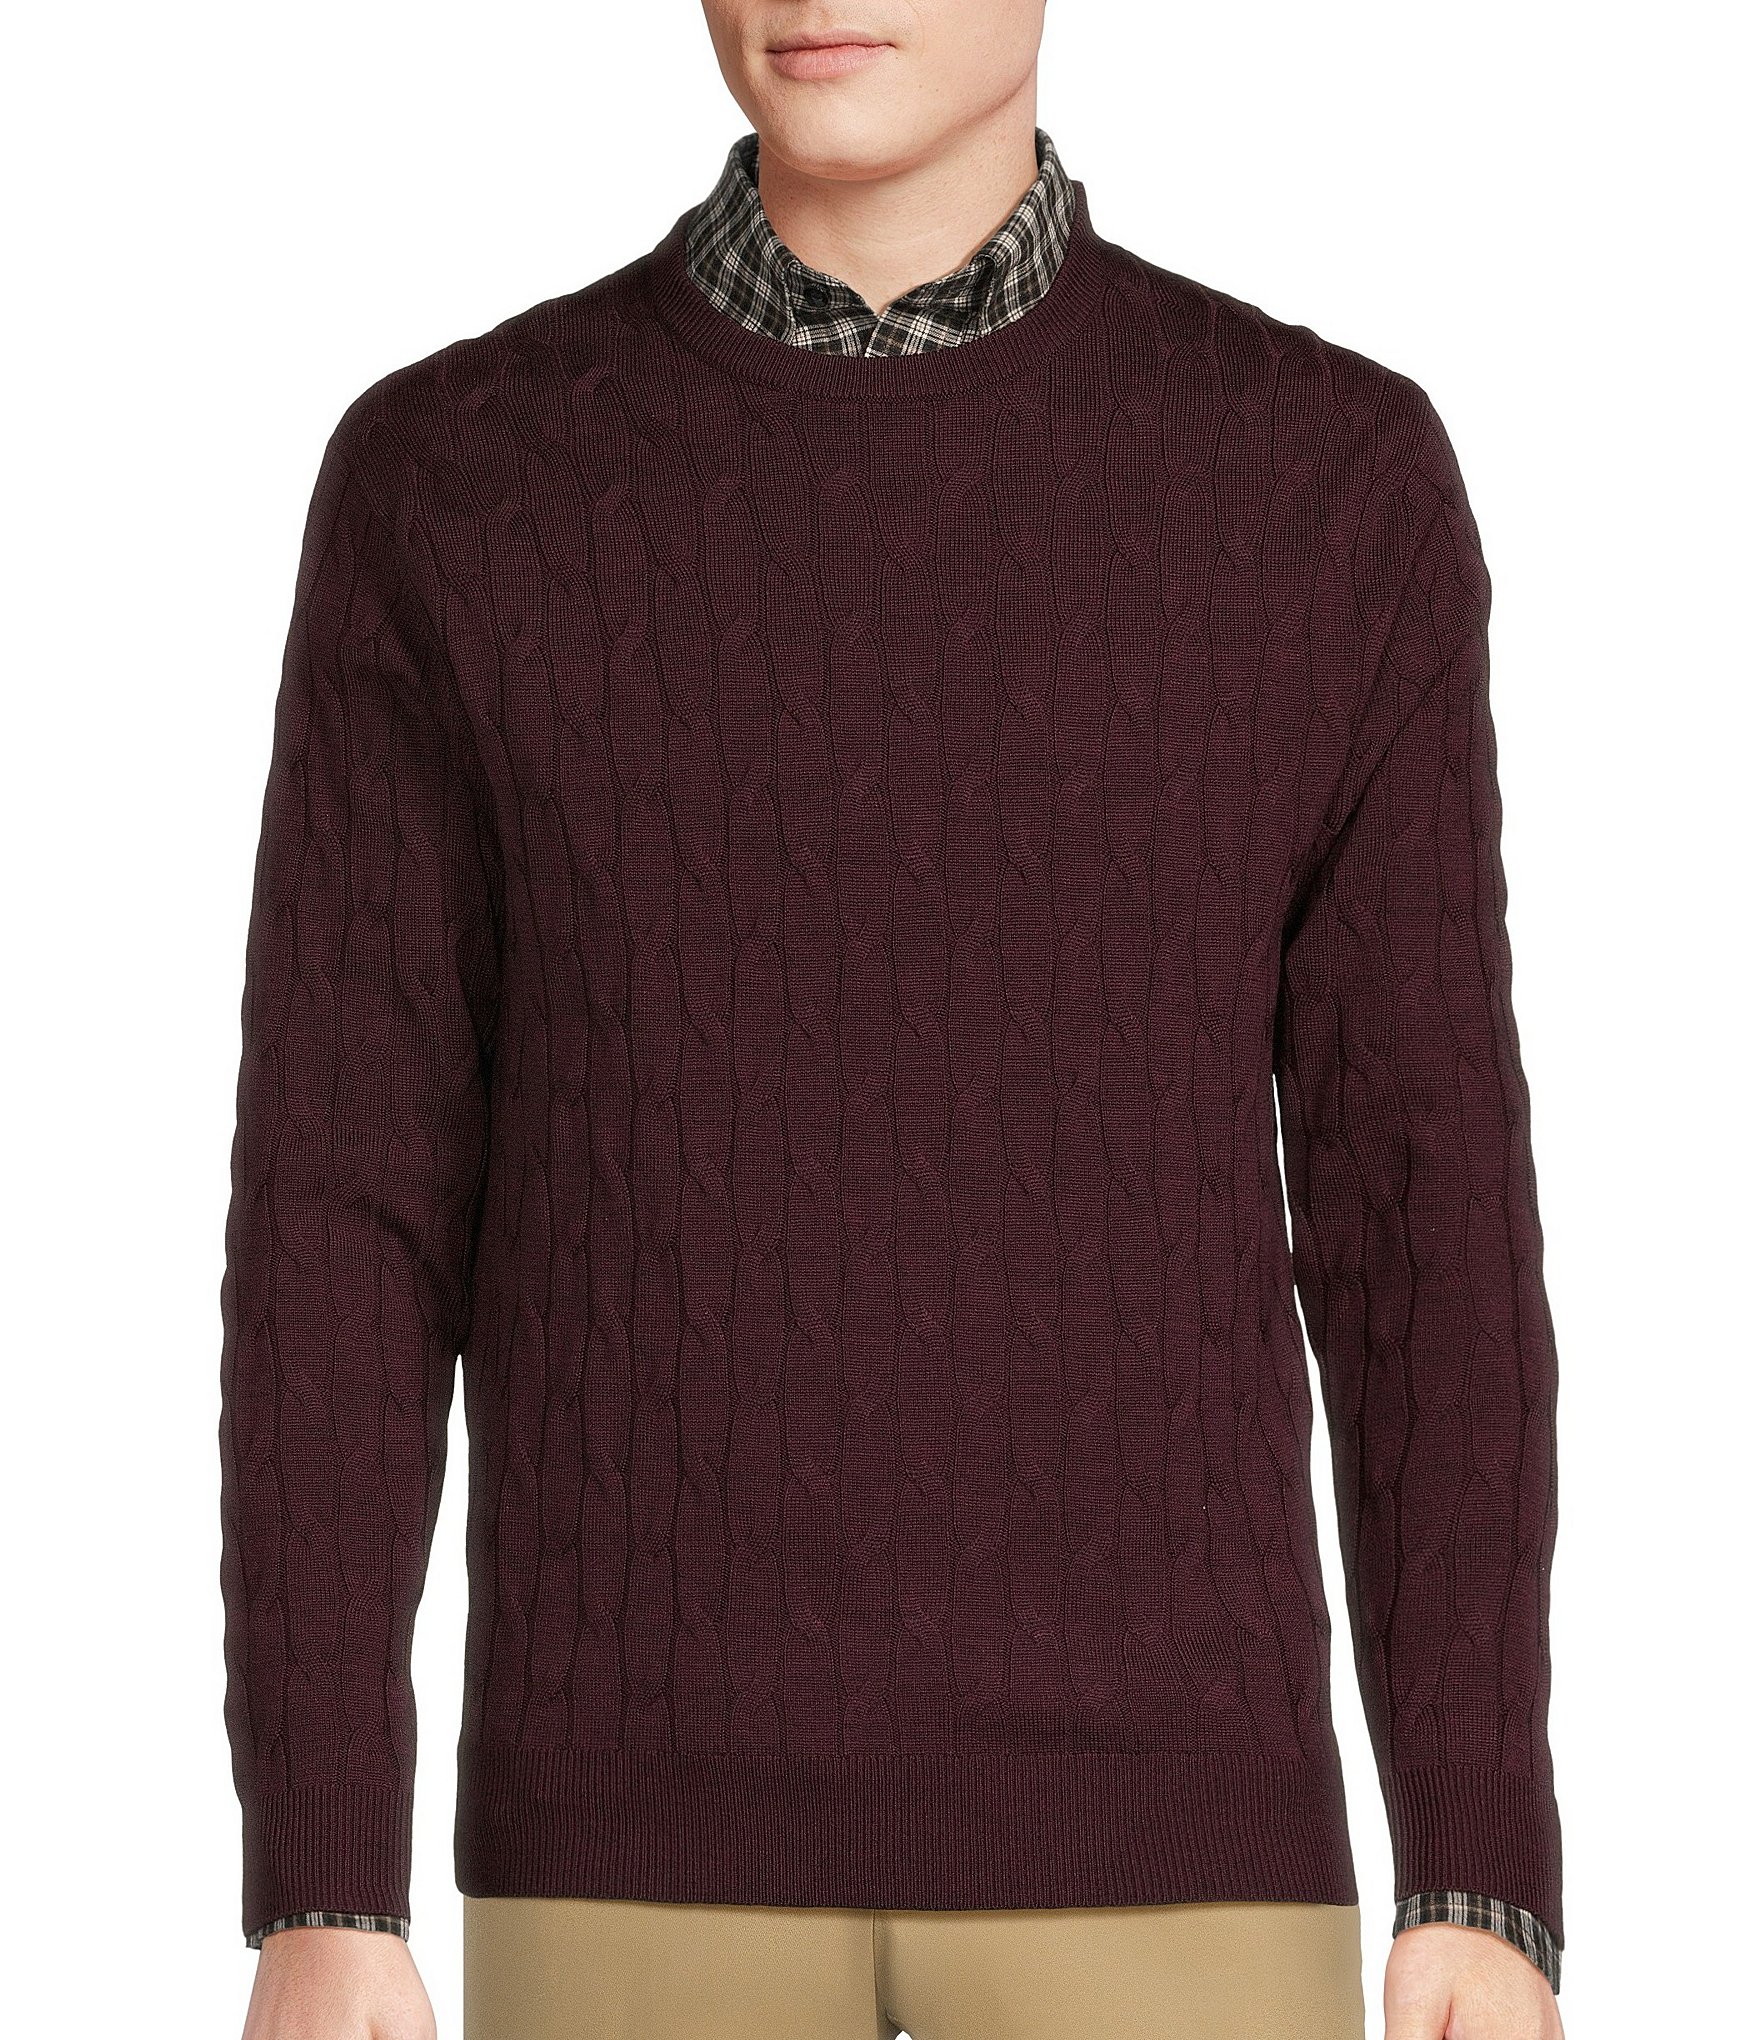 Daniel Cremieux Signature Label Merino Wool Cable Knit Sweater | Dillard's